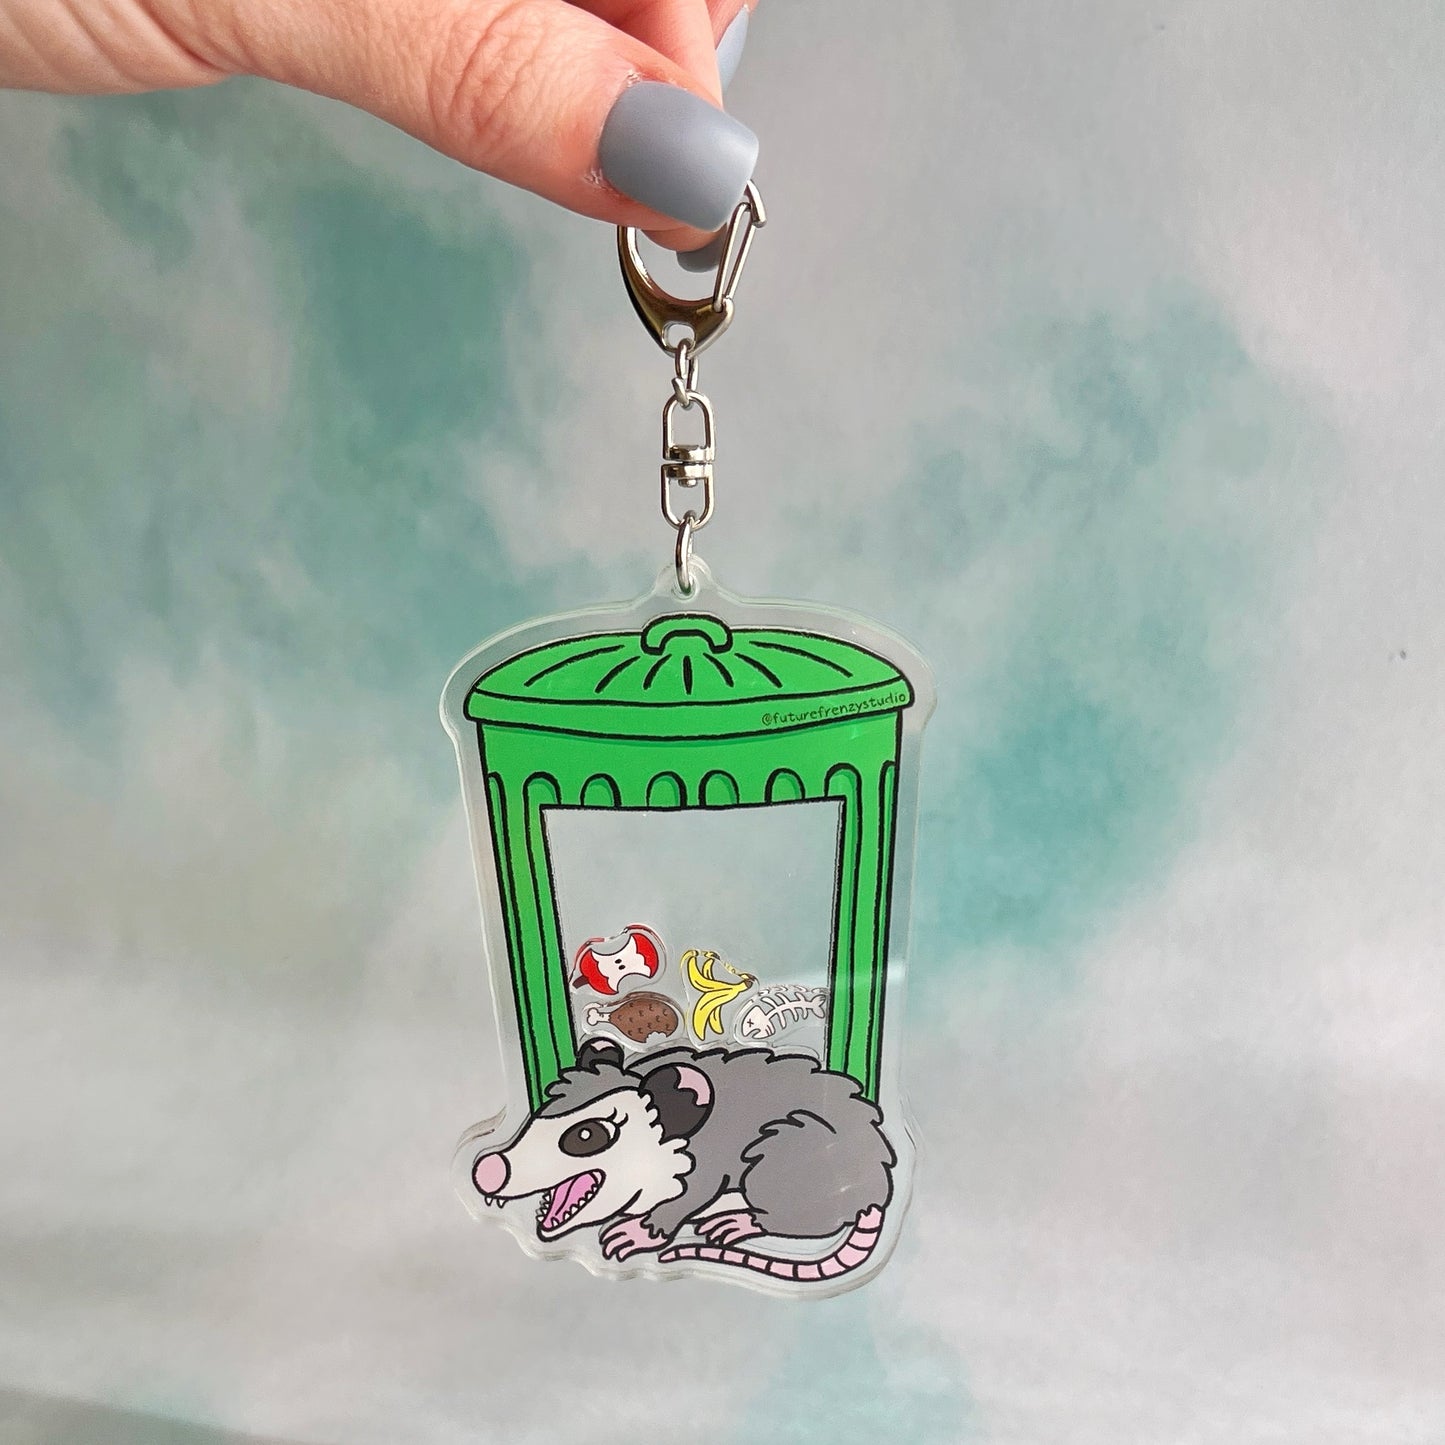 Opossum trash shaker keychain